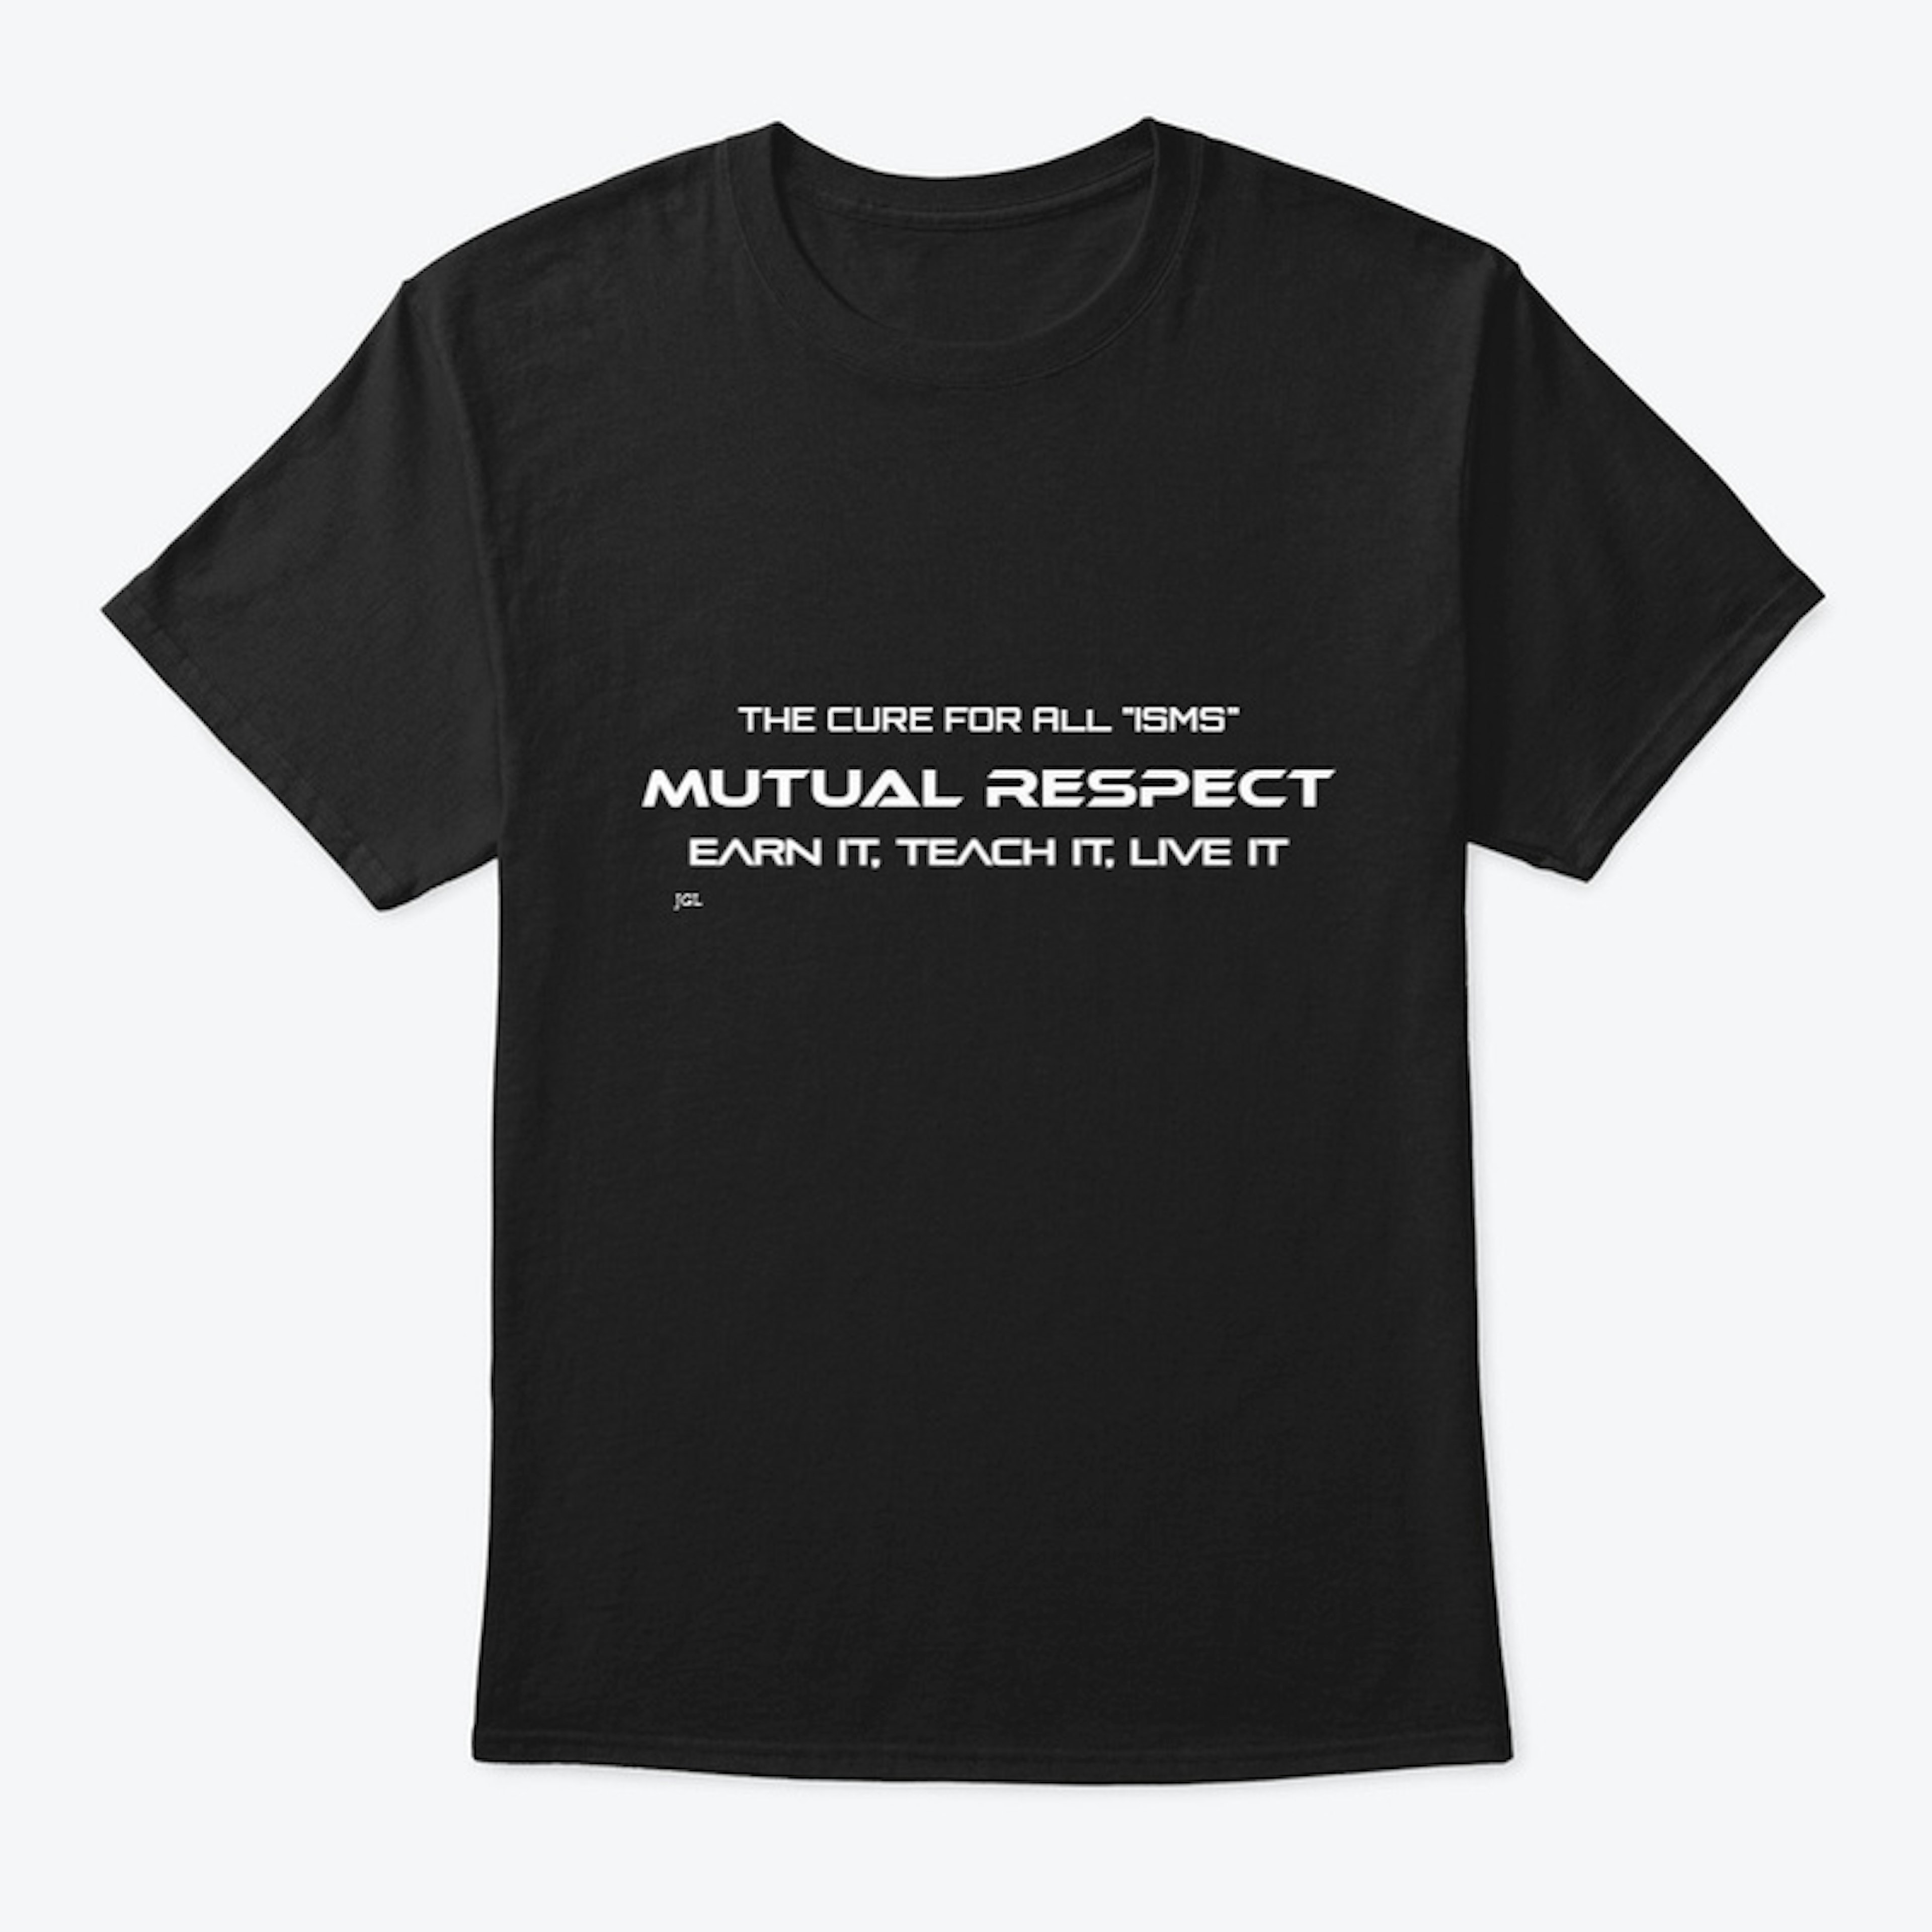 Mutual Respect sweatshirt